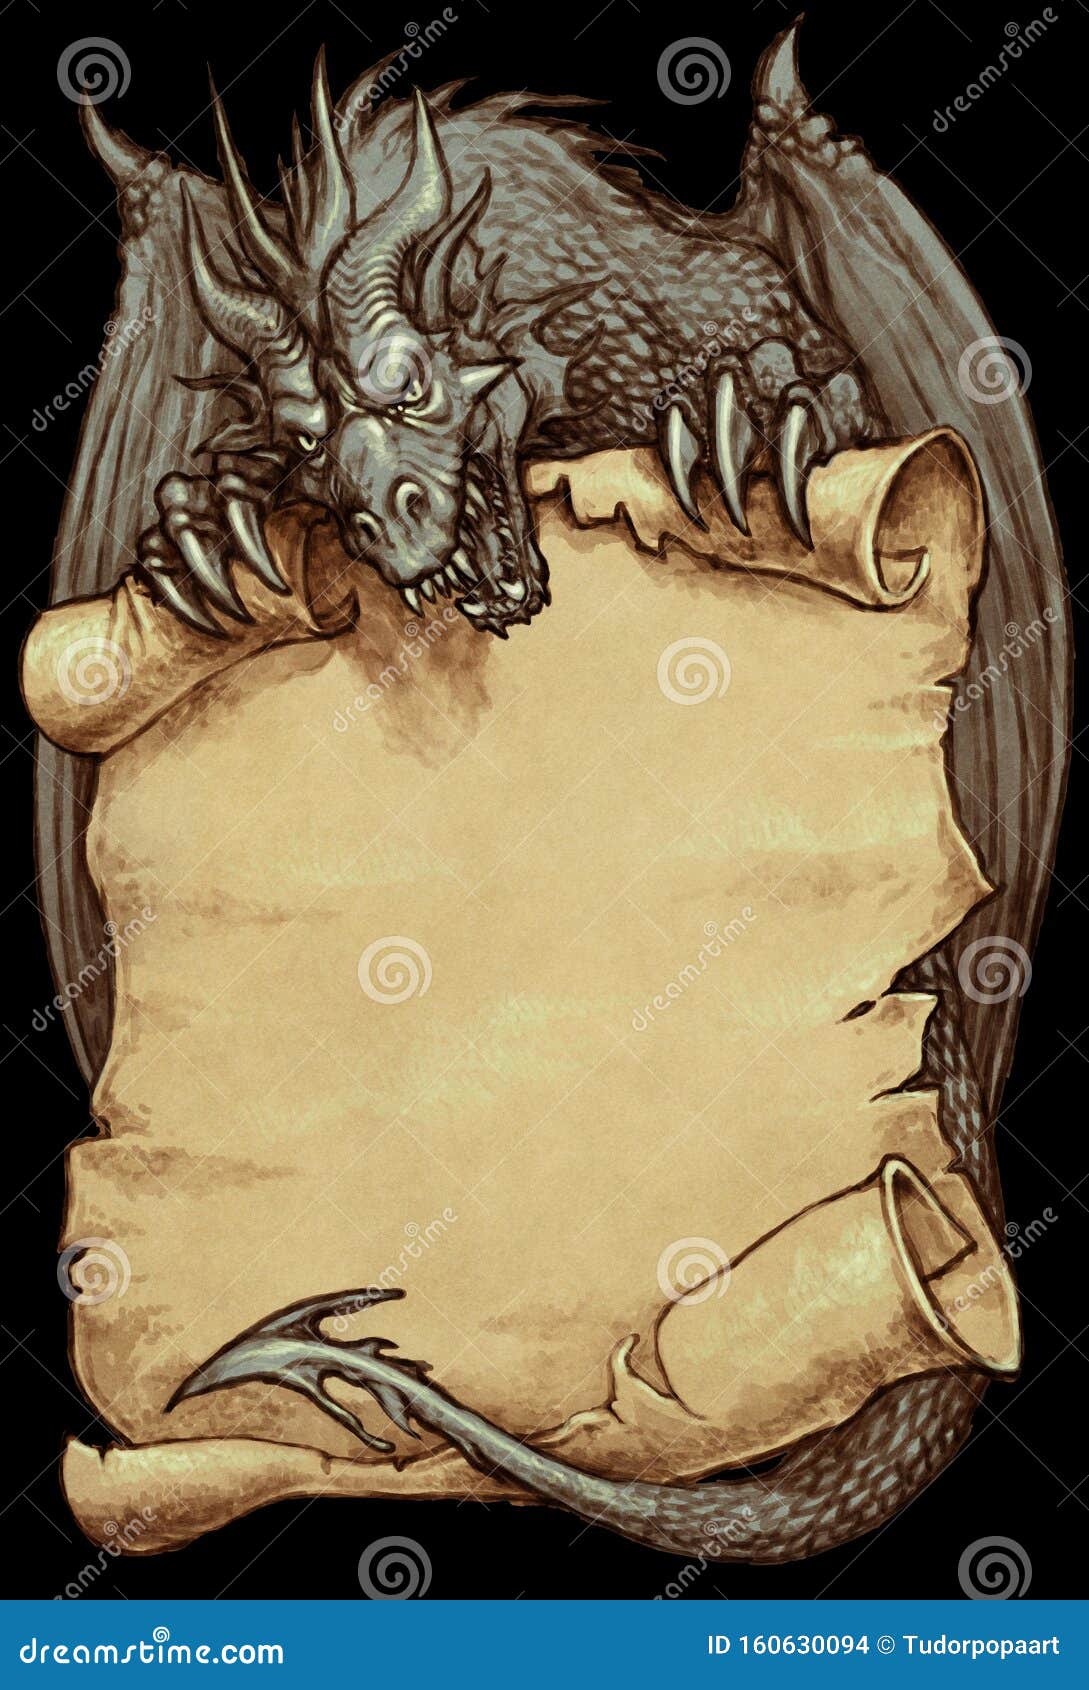 gray dragon holding an ancient scroll - fantasy 